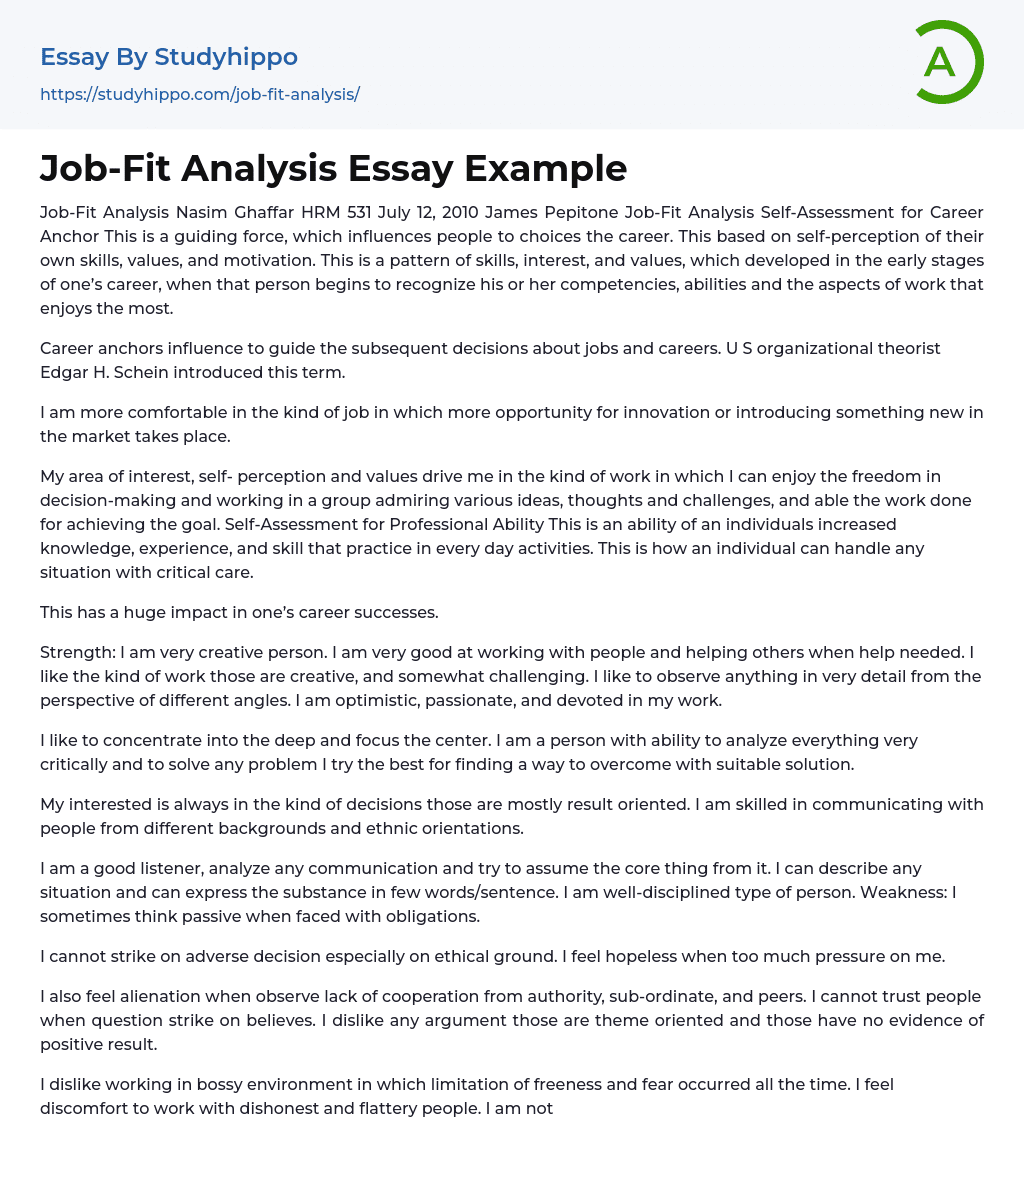 Job-Fit Analysis Essay Example